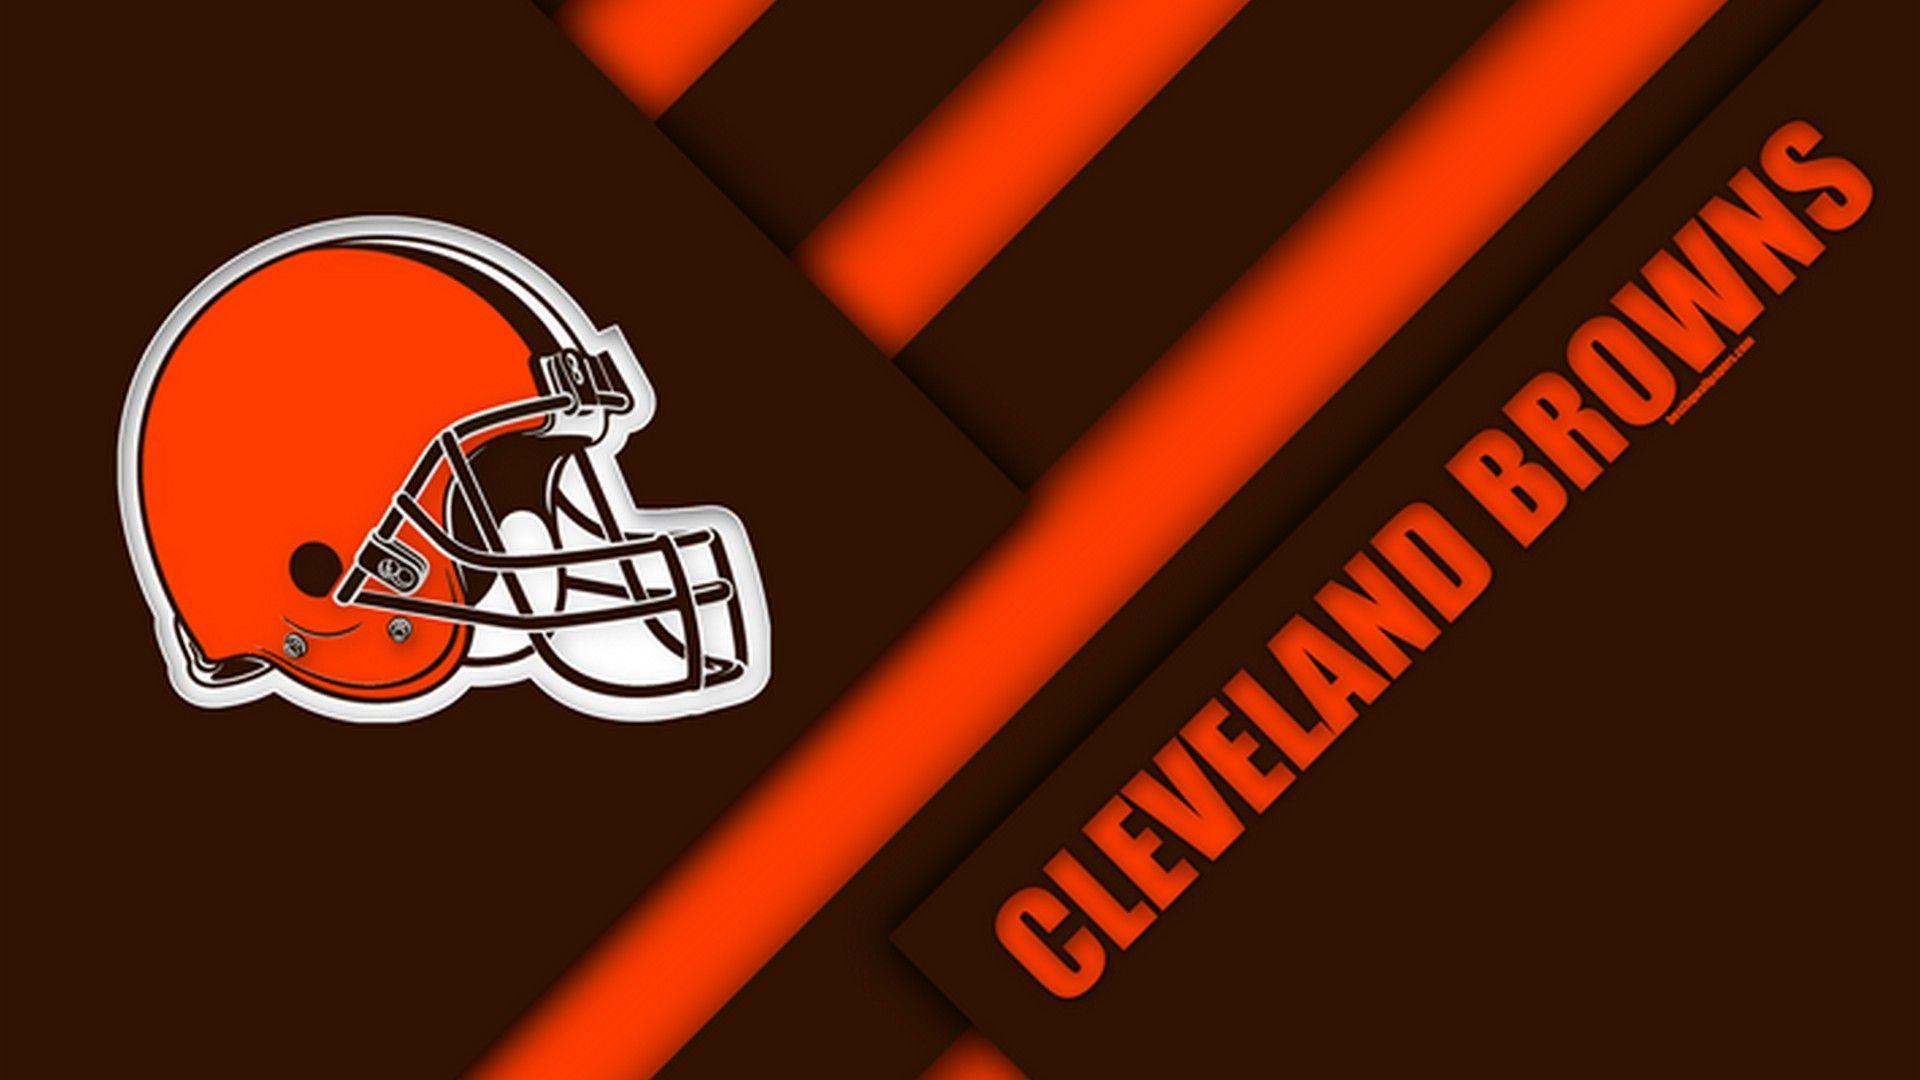 New Cleveland Browns Screensaver  Cleveland browns wallpaper Nfl football  wallpaper Cleveland browns